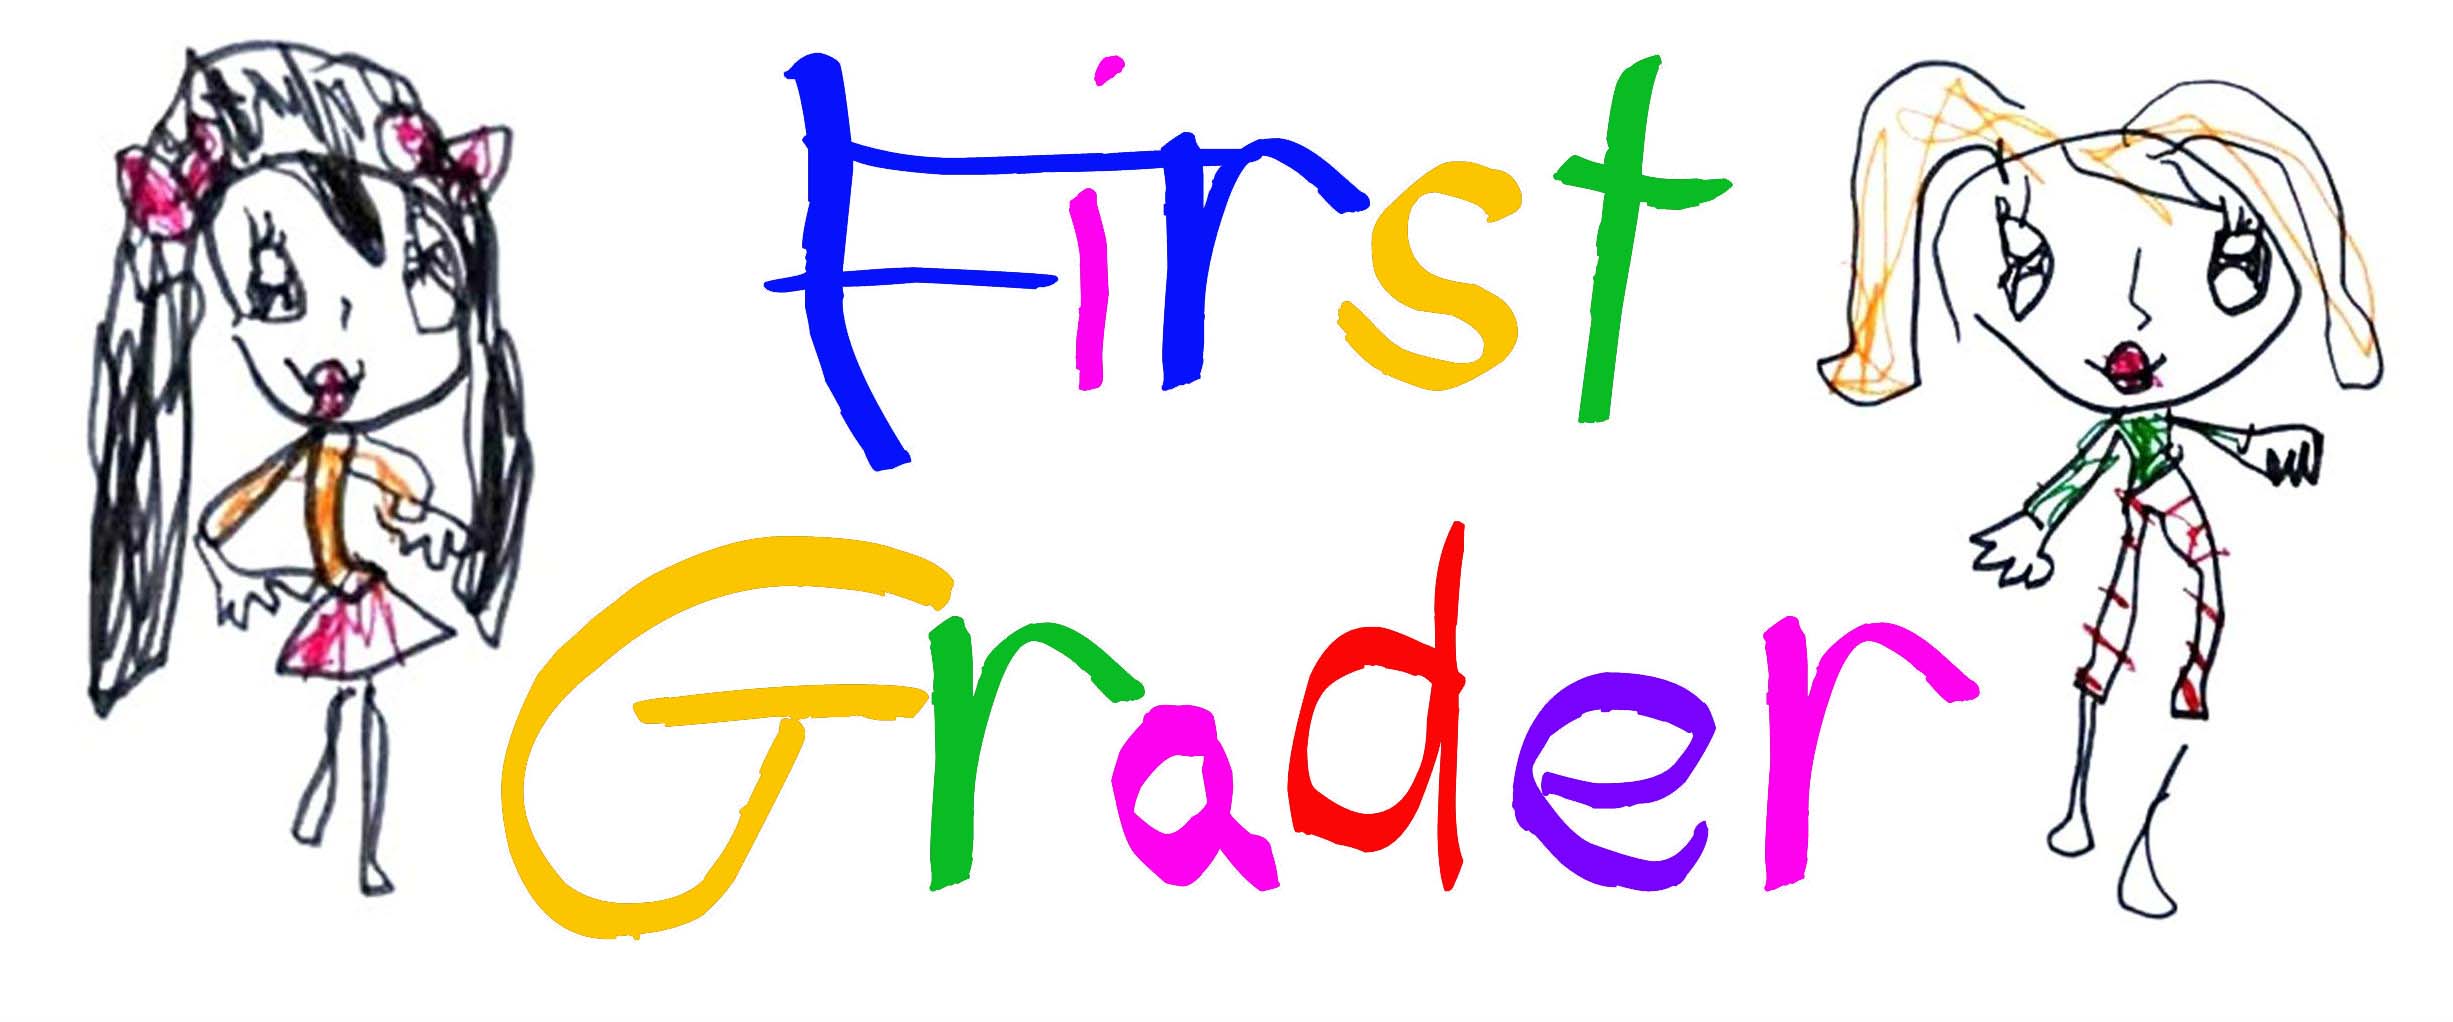 First Grader